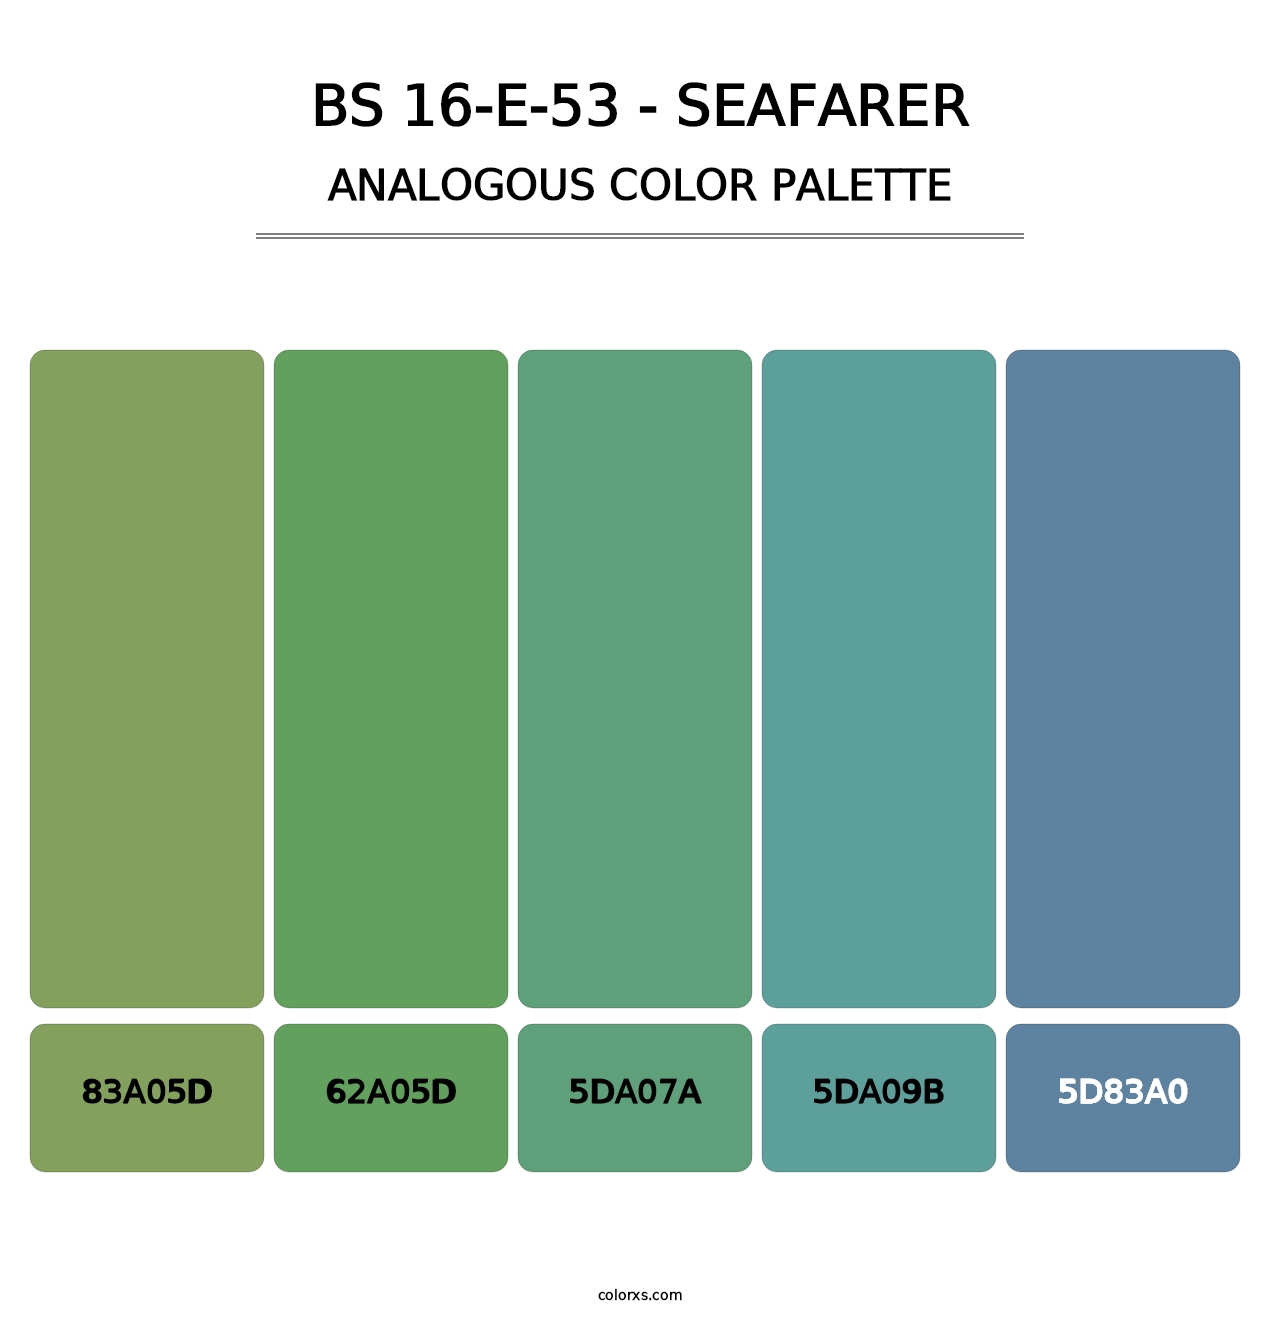 BS 16-E-53 - Seafarer - Analogous Color Palette